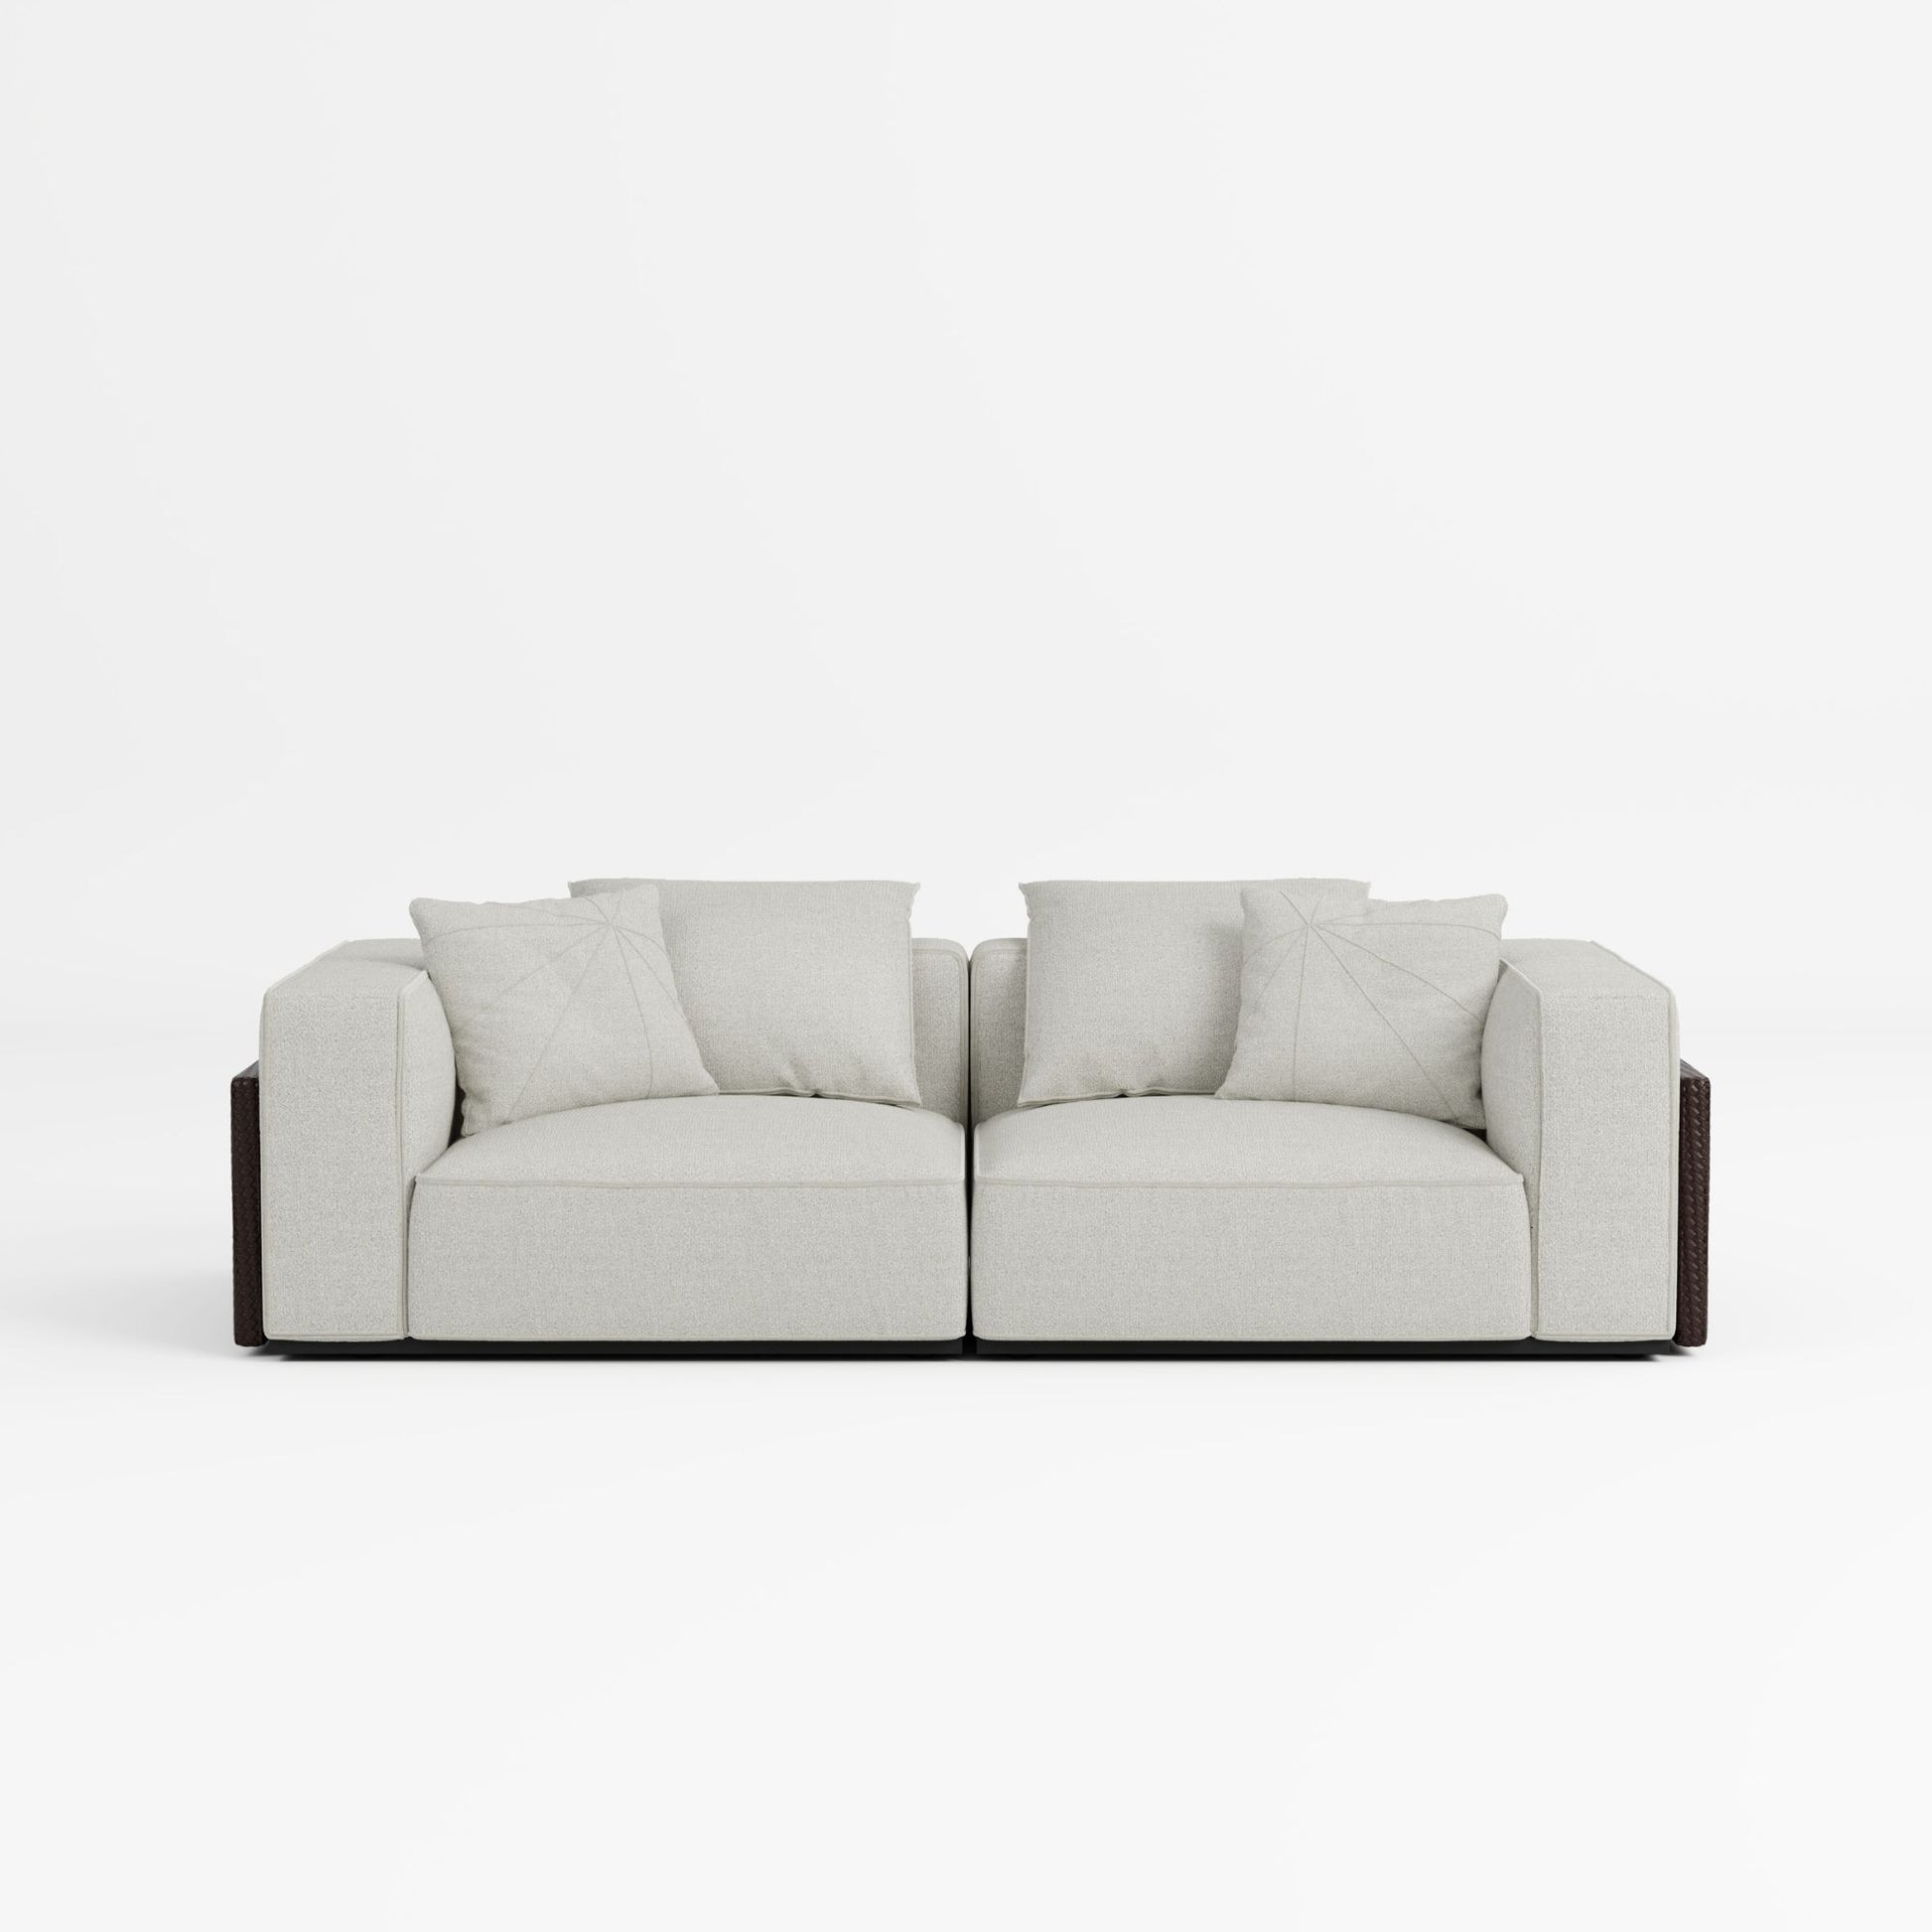 Carson grey polyester blend fabric sofa